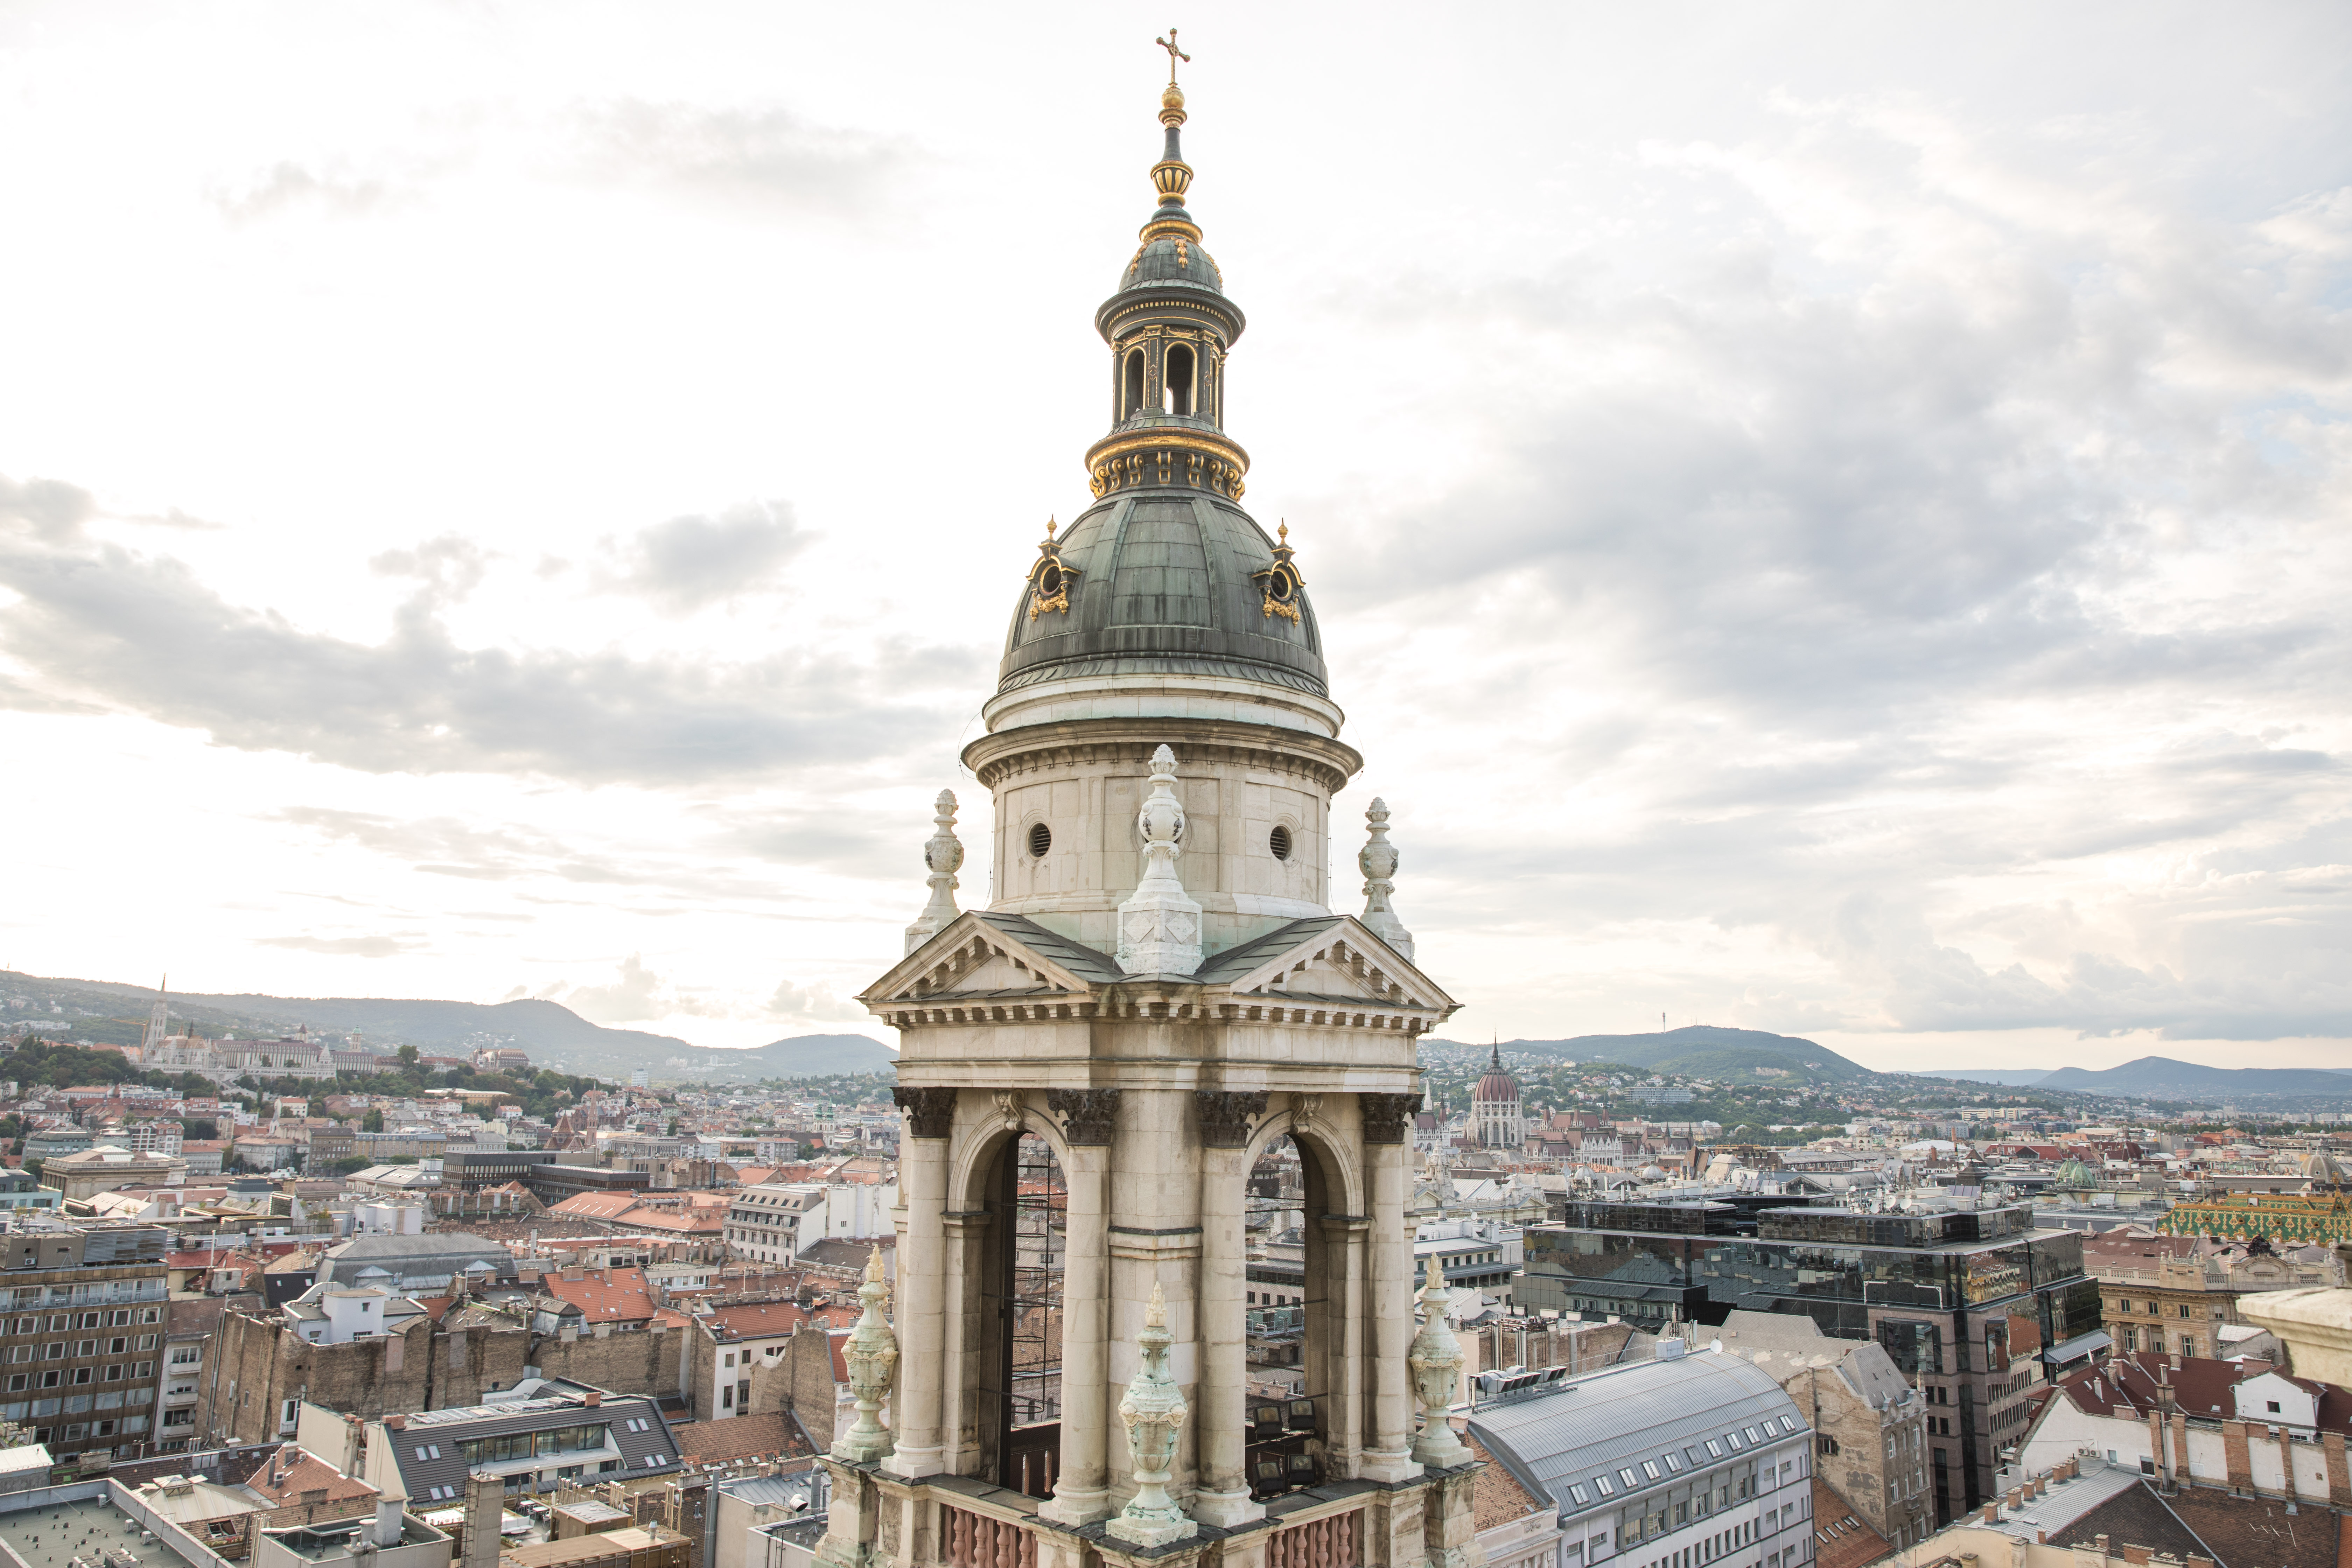 St. Stephen's Basilica Budapest